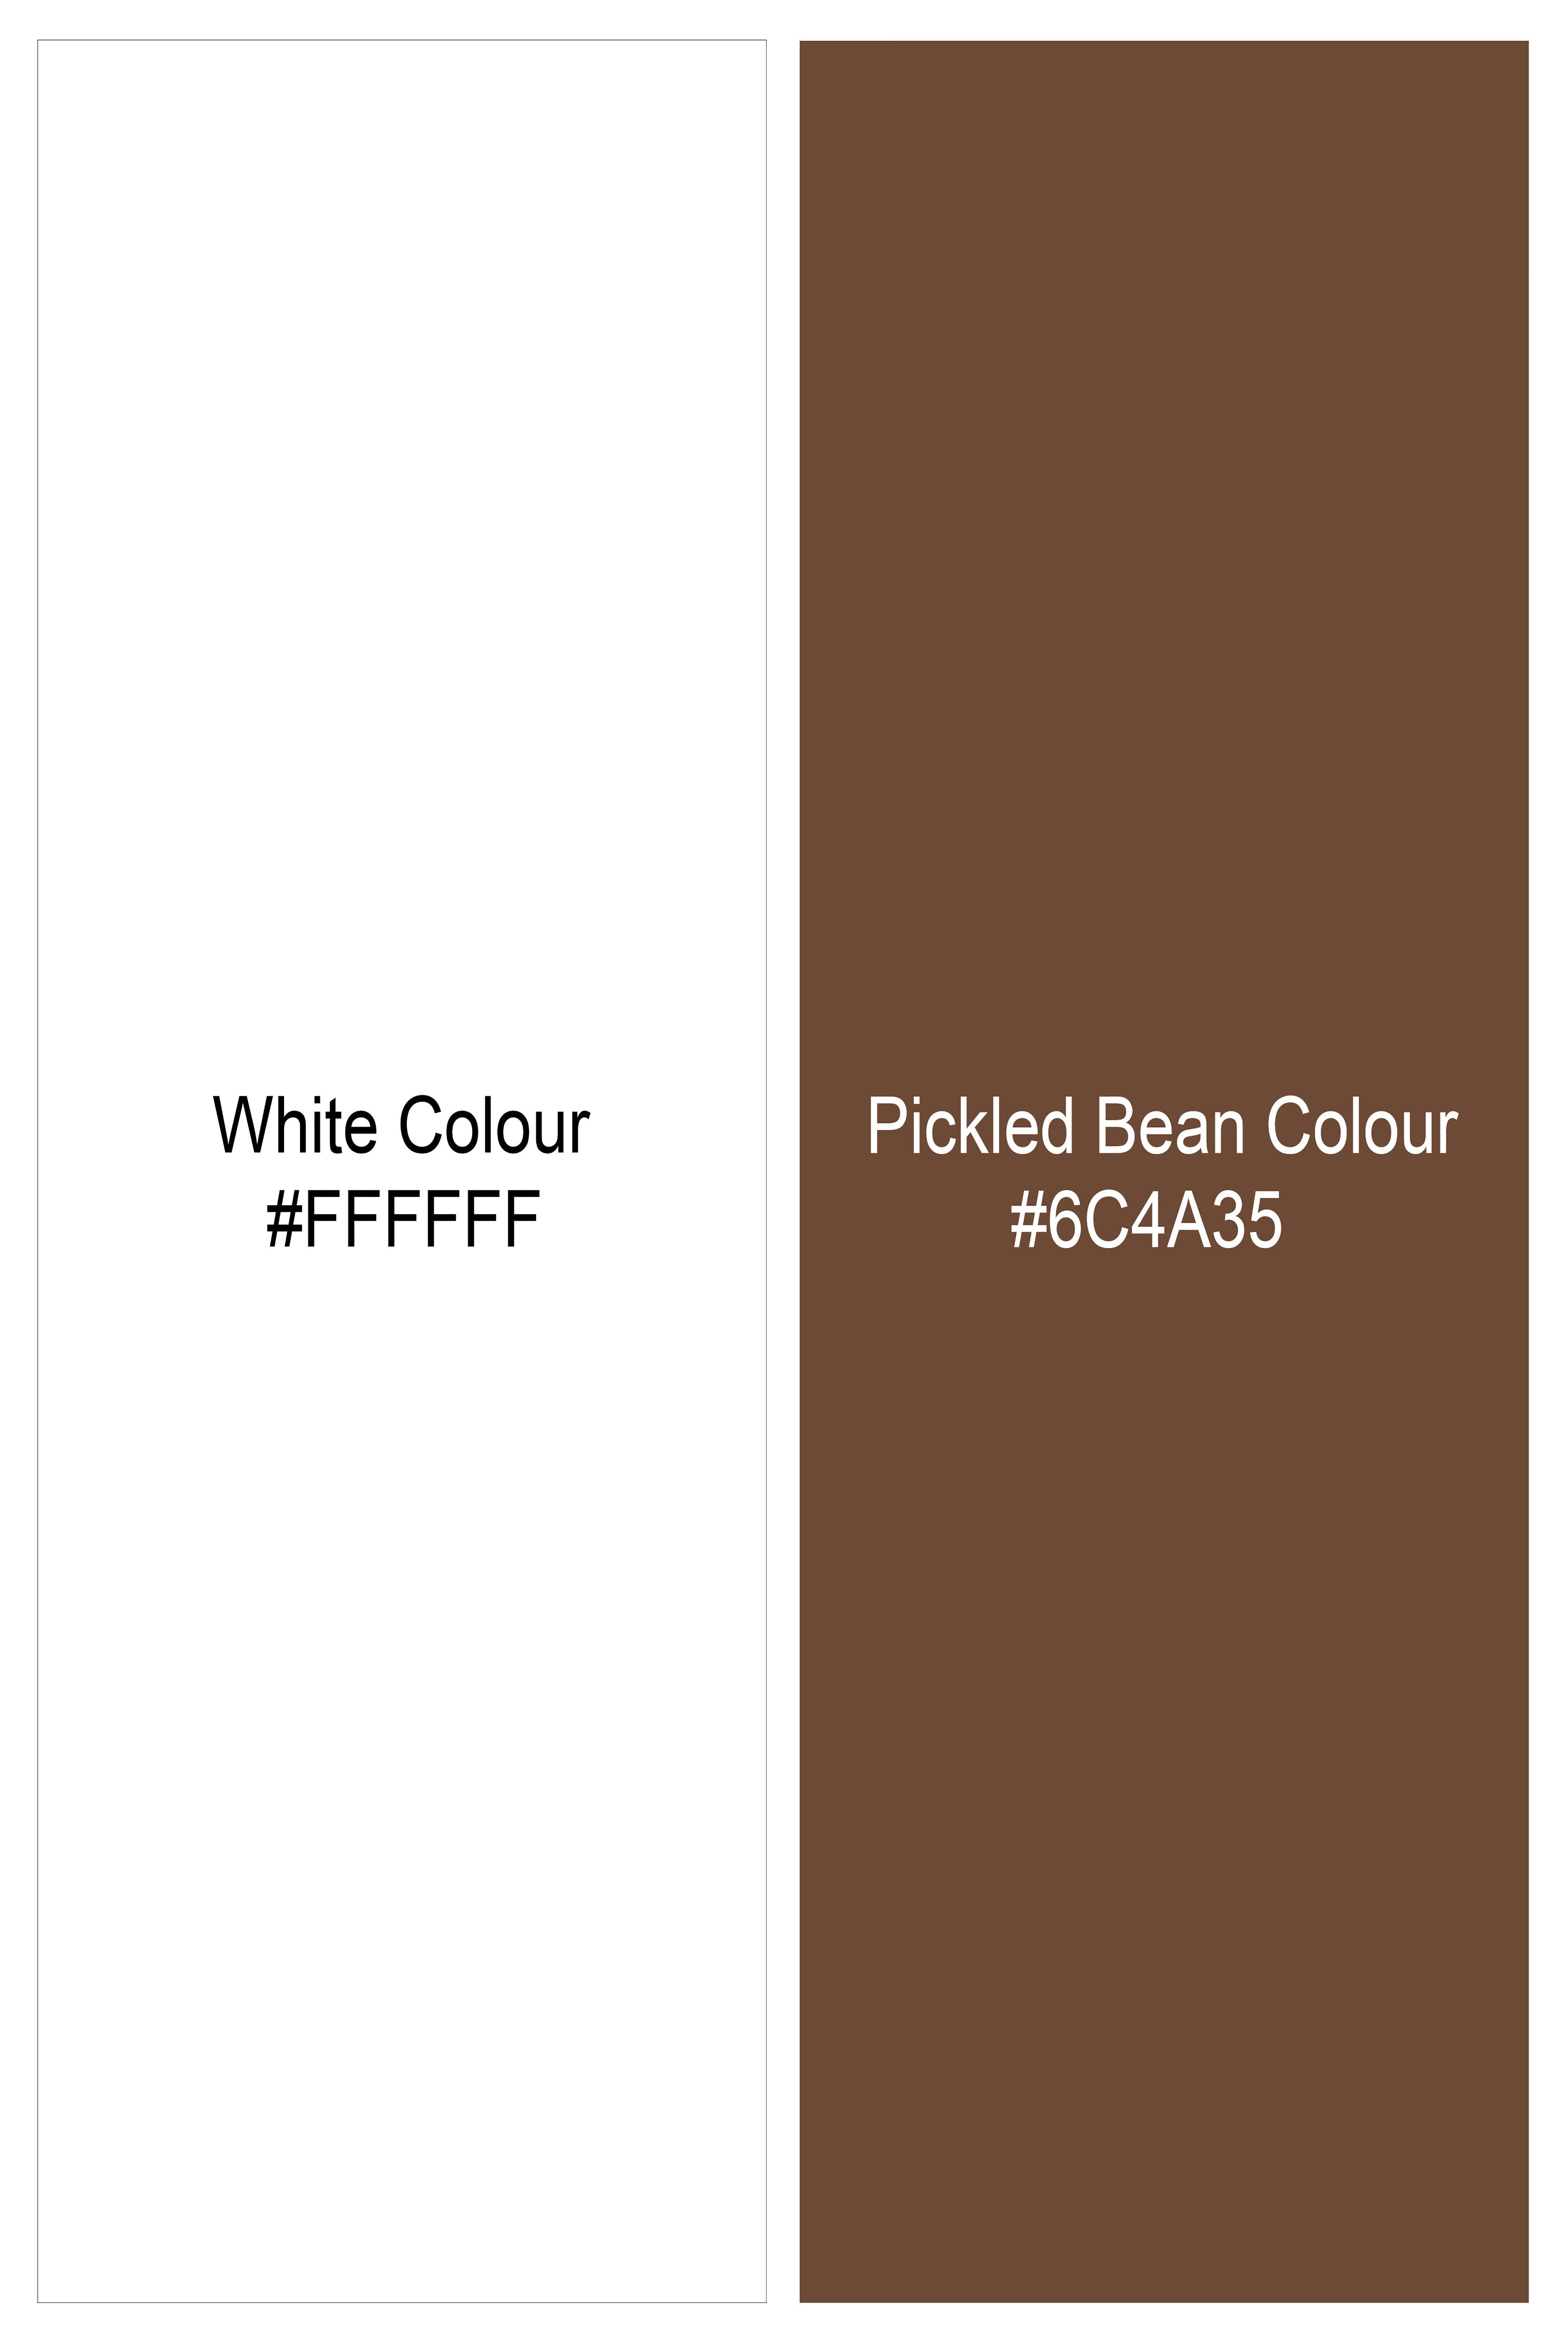 Pickled Bean Brown with Off White Patchwork Super Soft Premium Cotton Designer Shirt